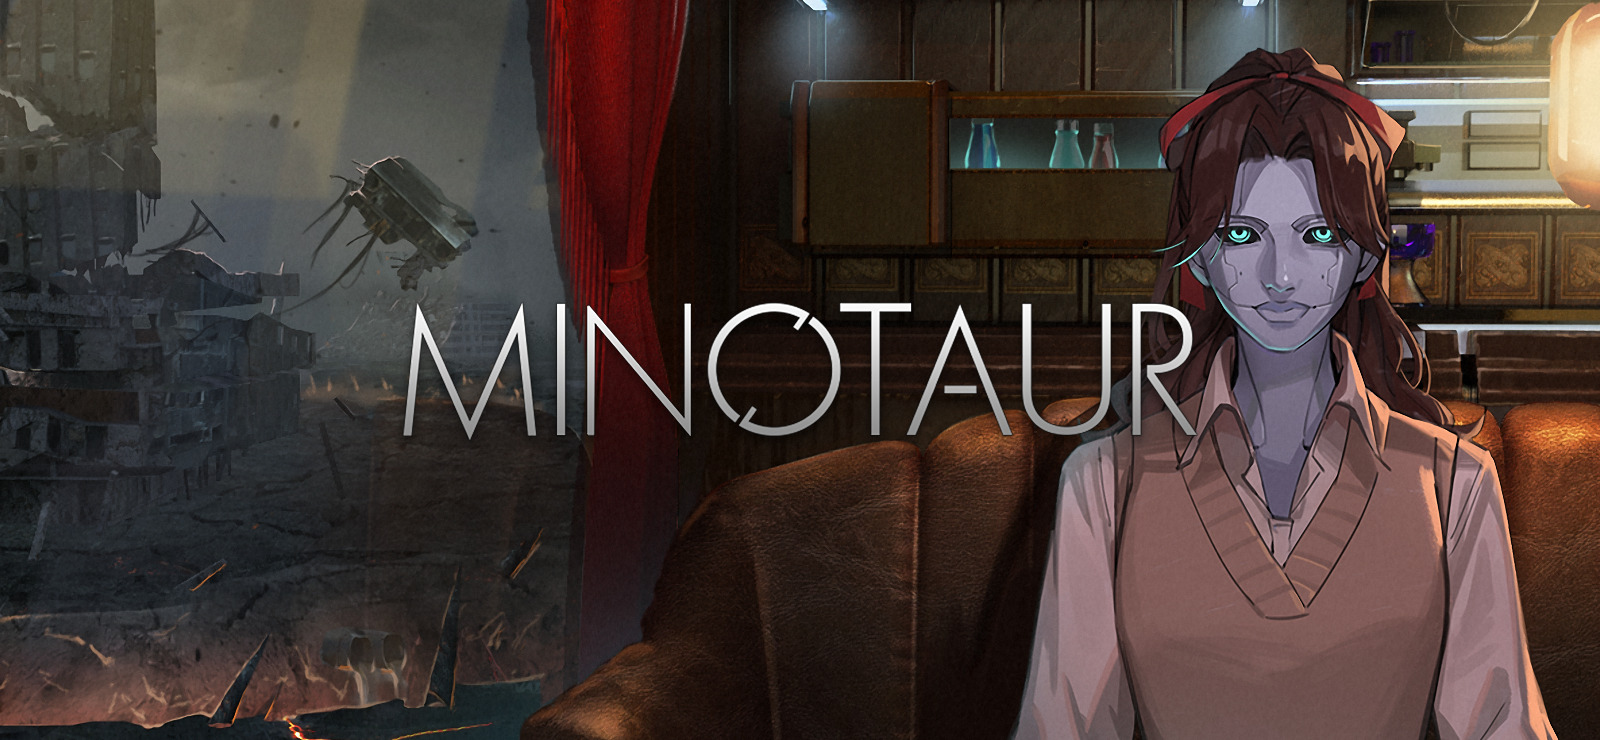 Новелла событий. Minotaur игра новелла ментор. Игра с минотаврами как называлась.